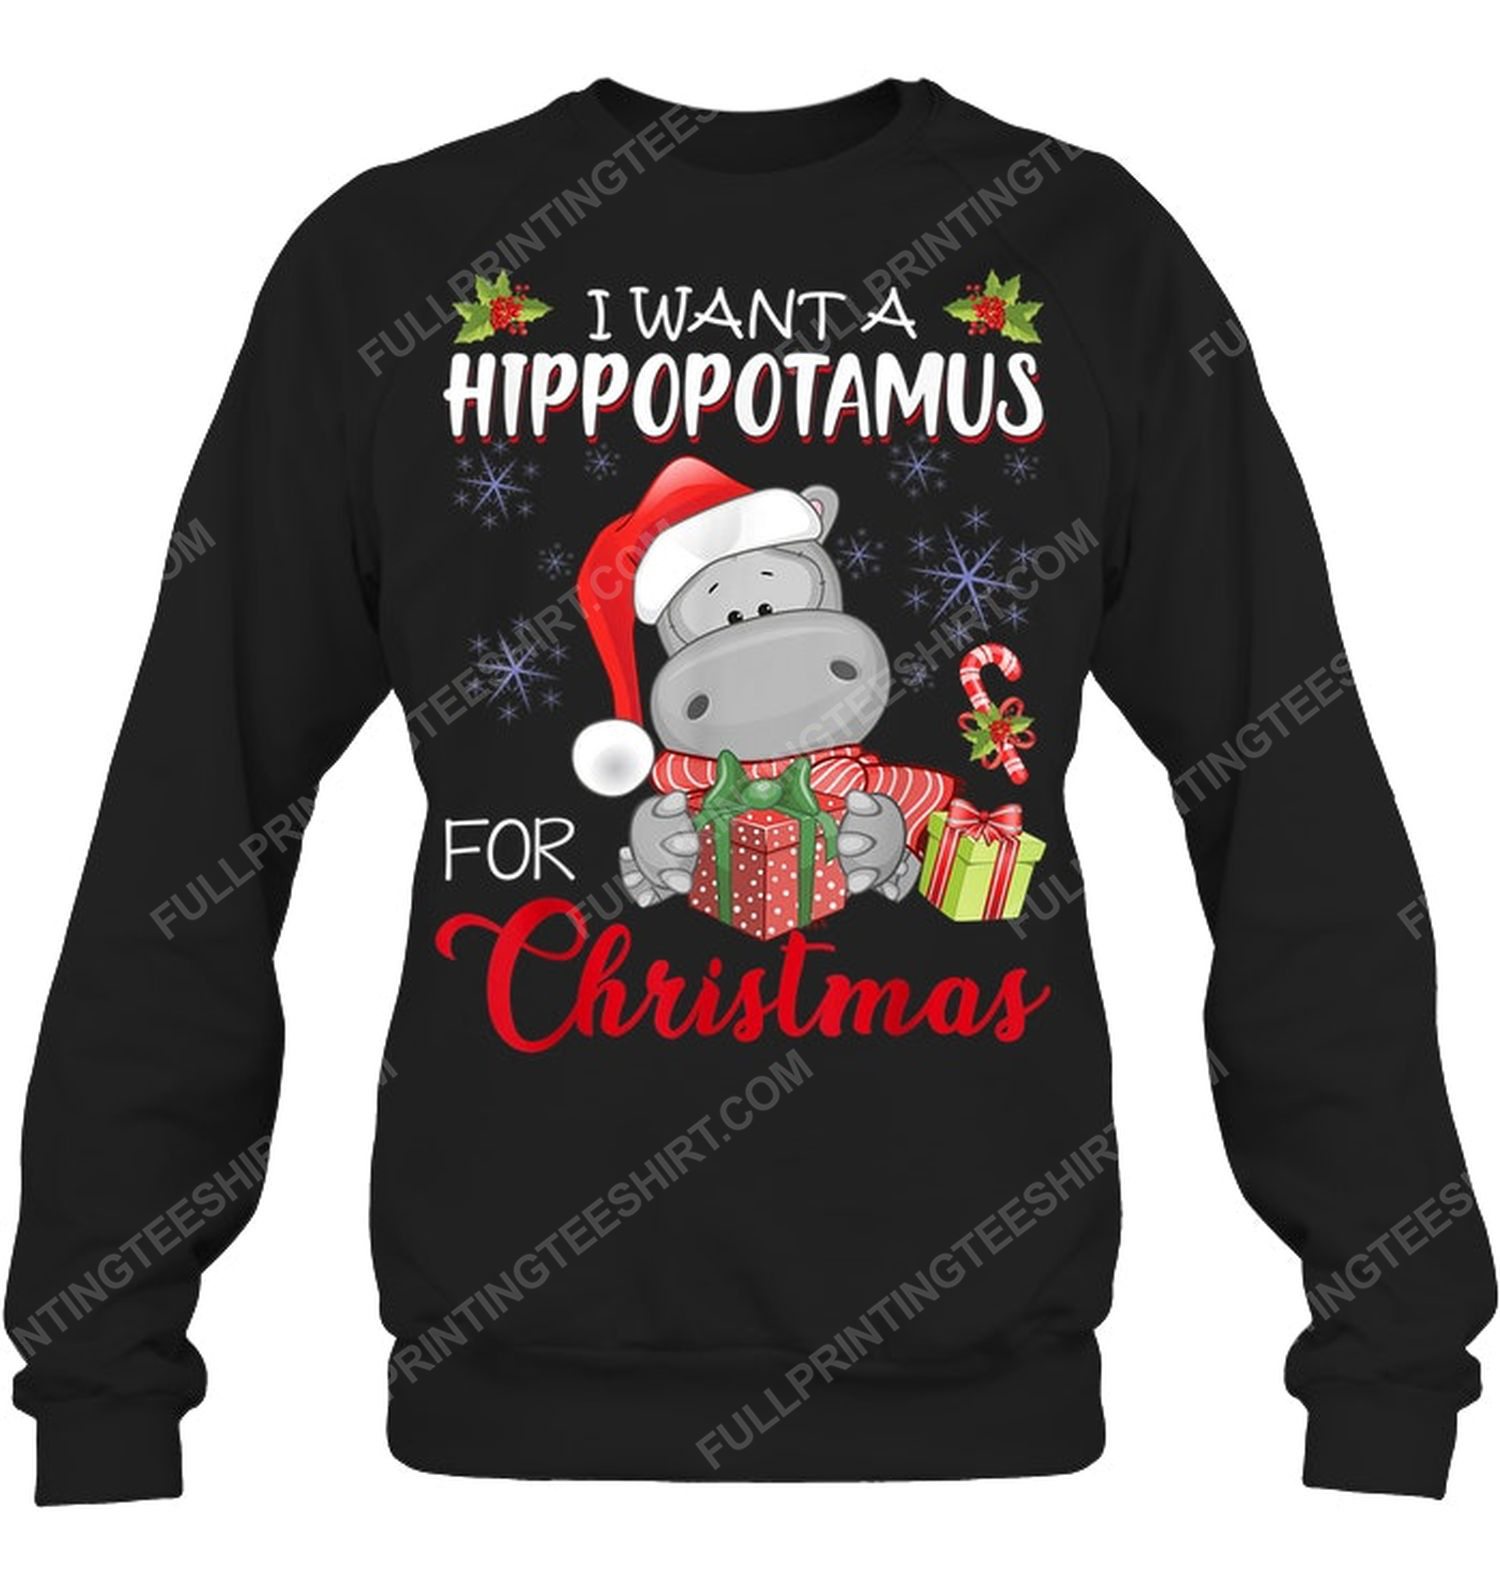 I want a hippopotamus for christmas sweatshirt